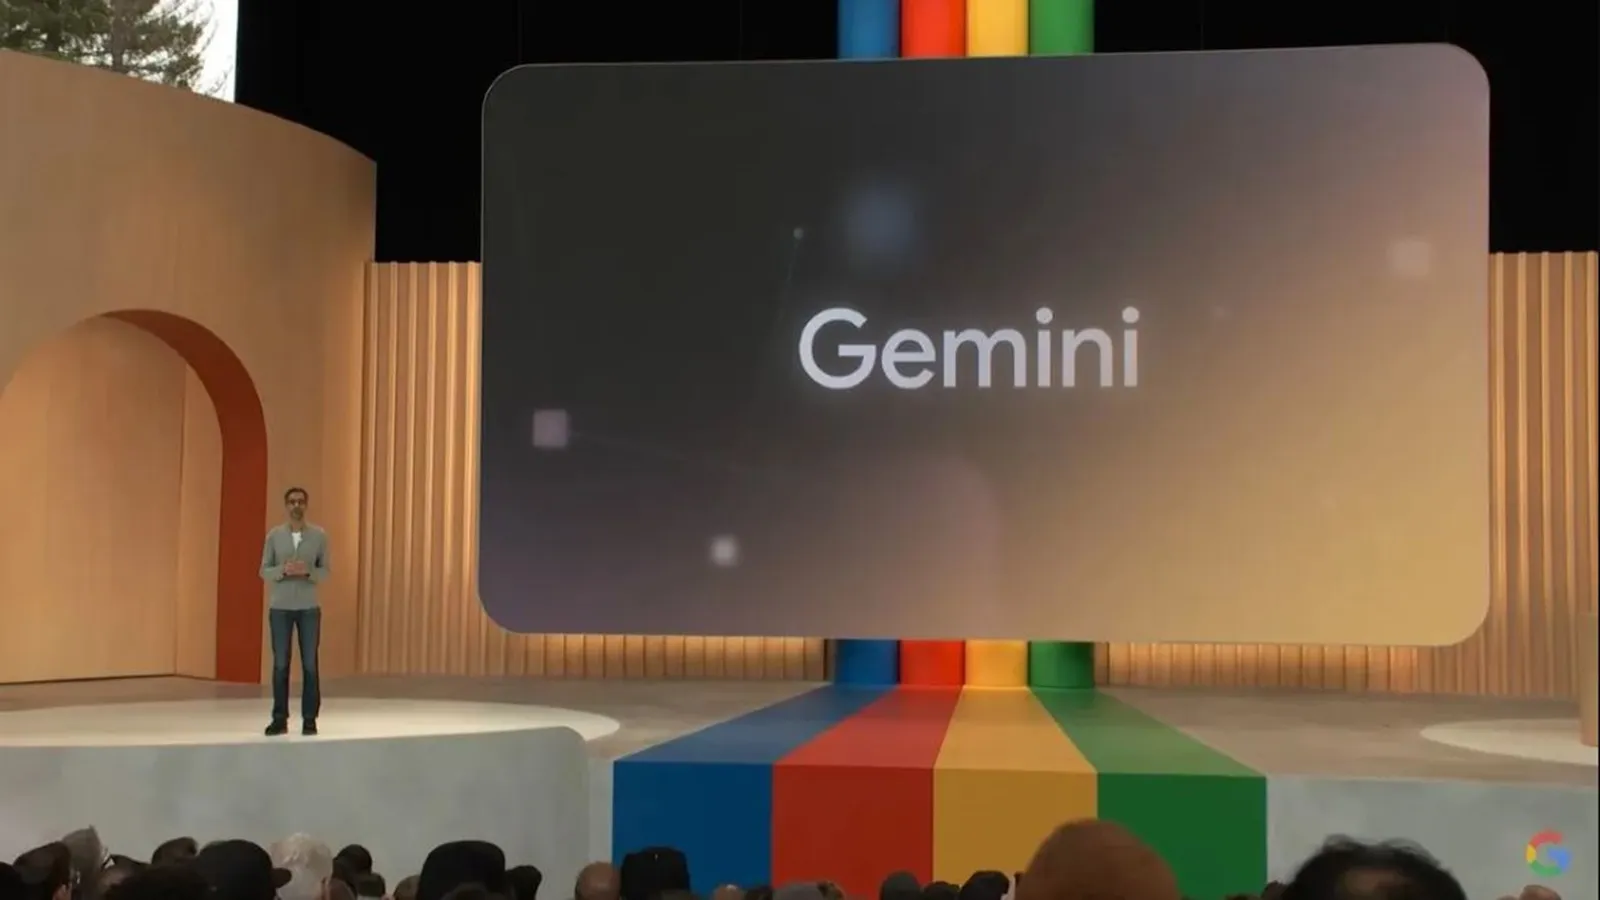 Google delays its nextgen AI model Gemini to January 2024 Report